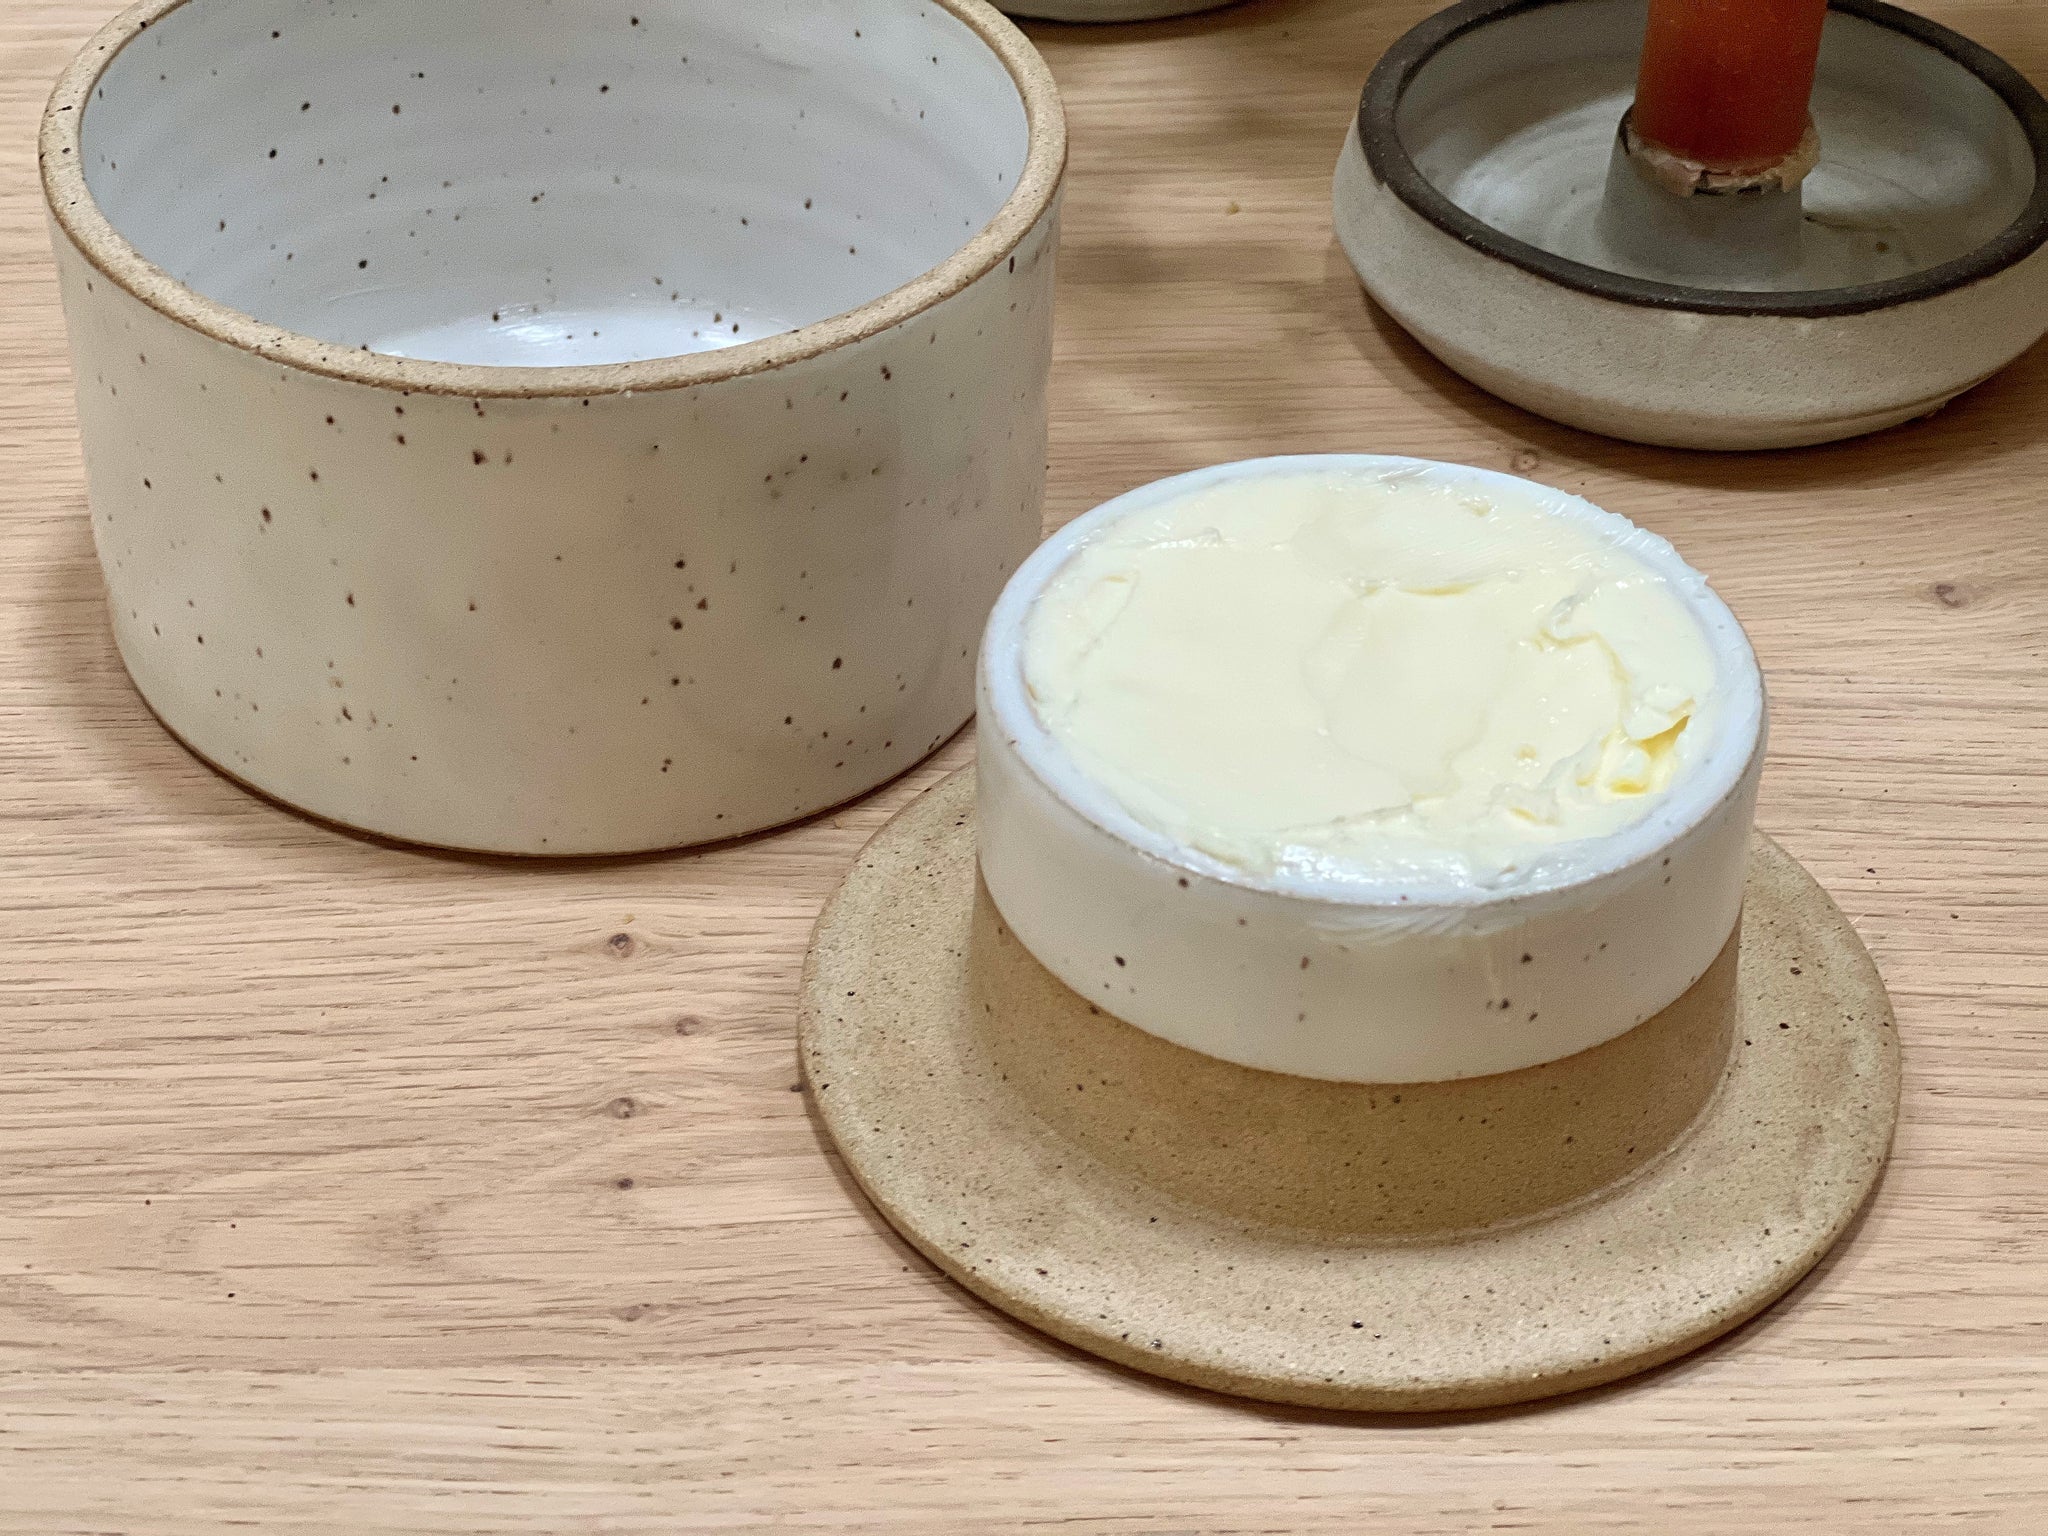 Ceramic Butter Keeper